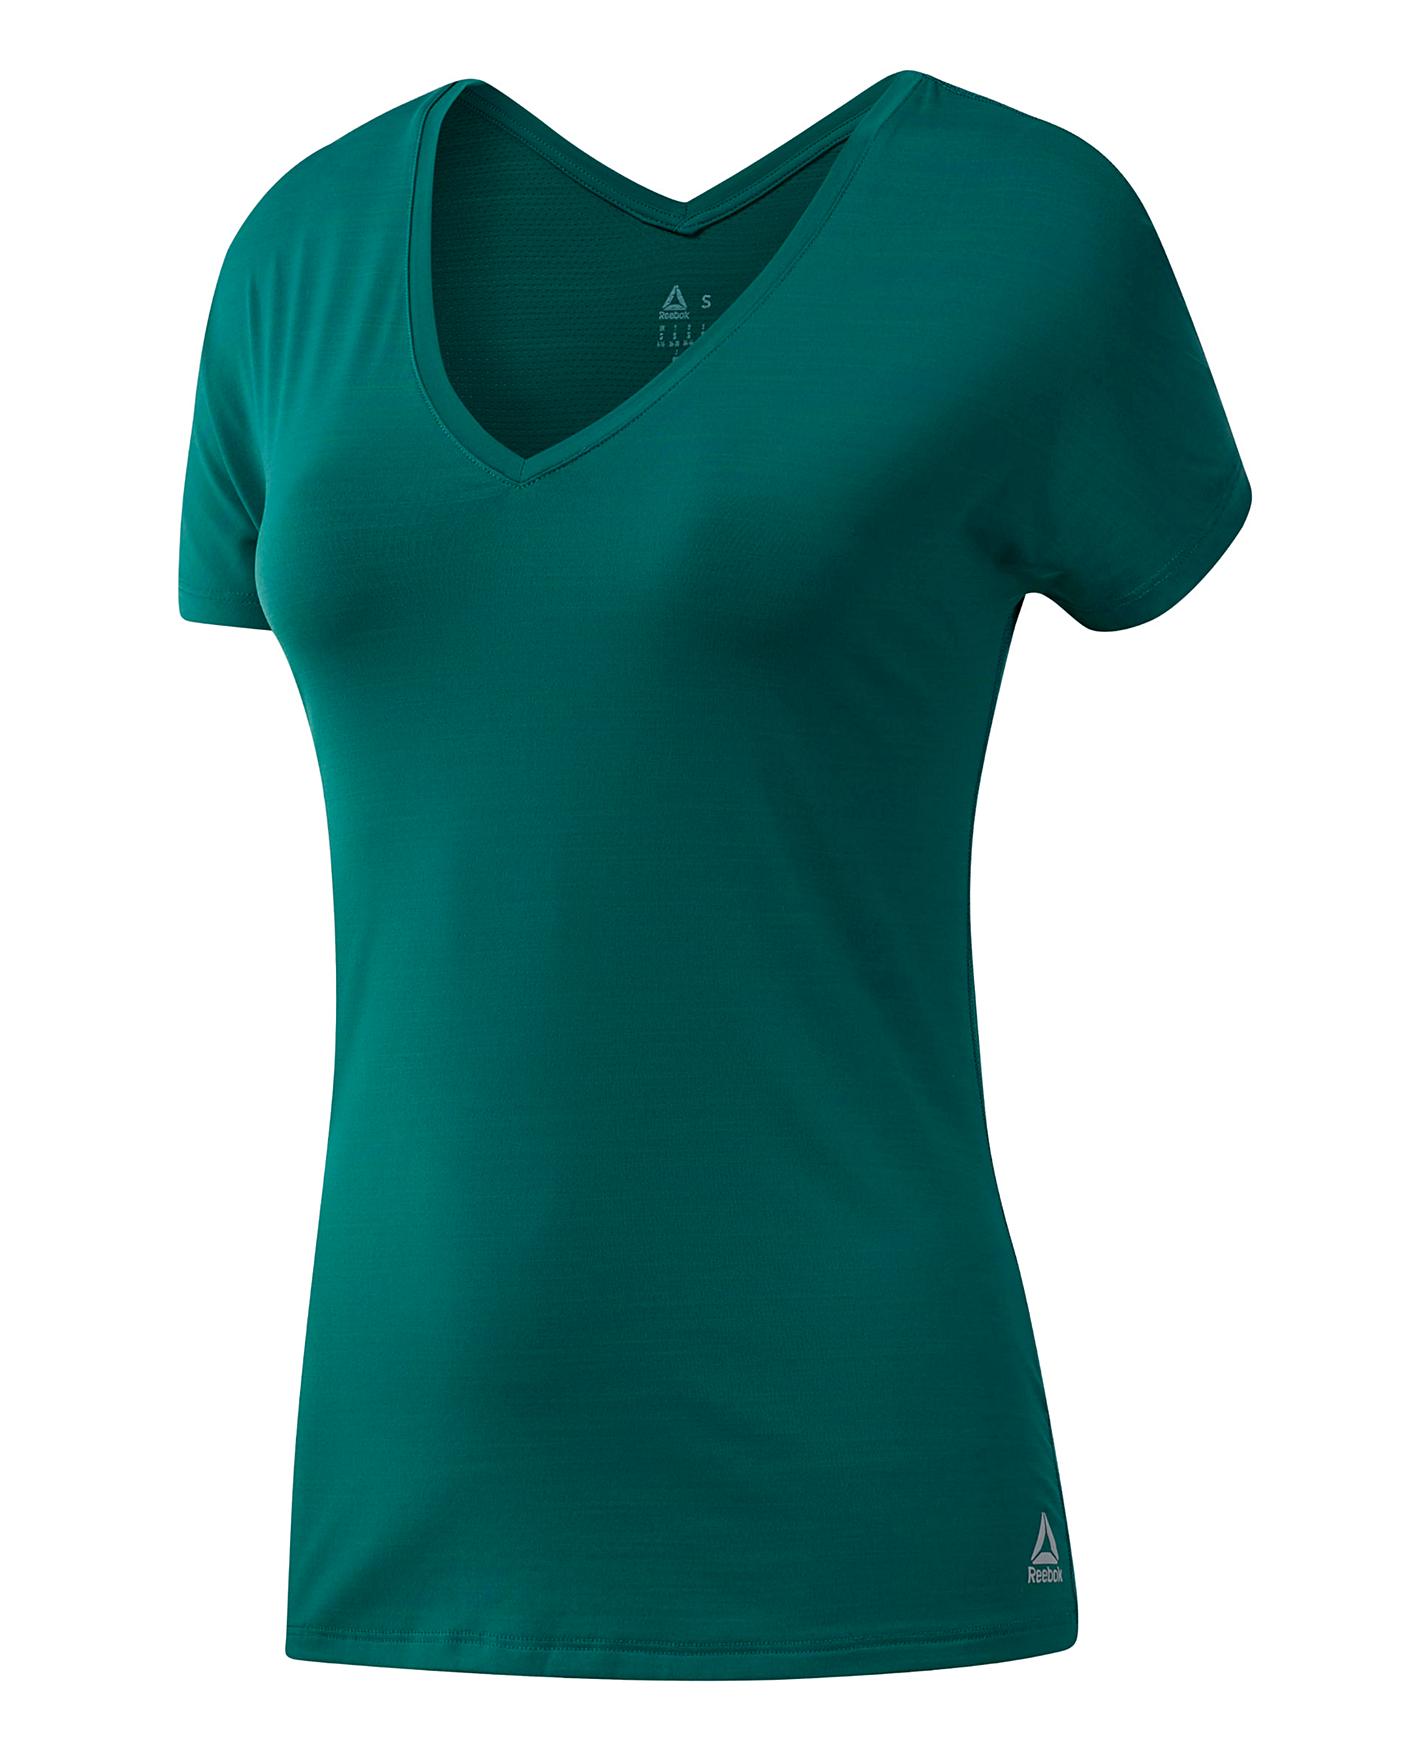 reebok shirts womens green